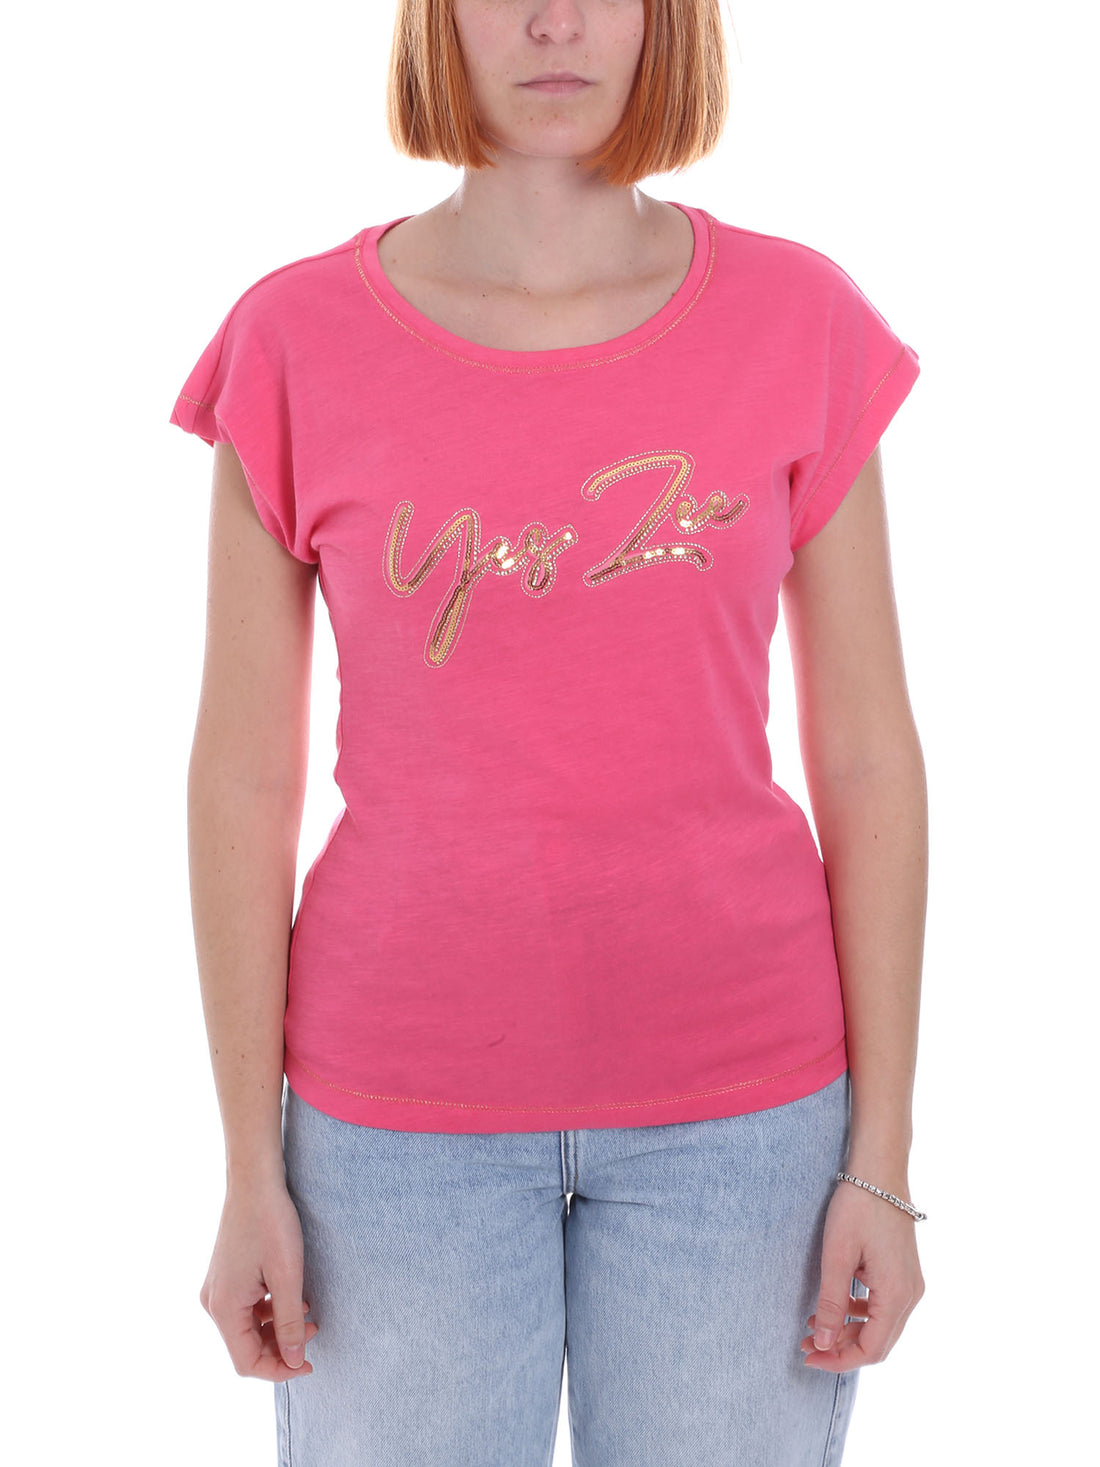 T-shirt Rosa Yes-zee